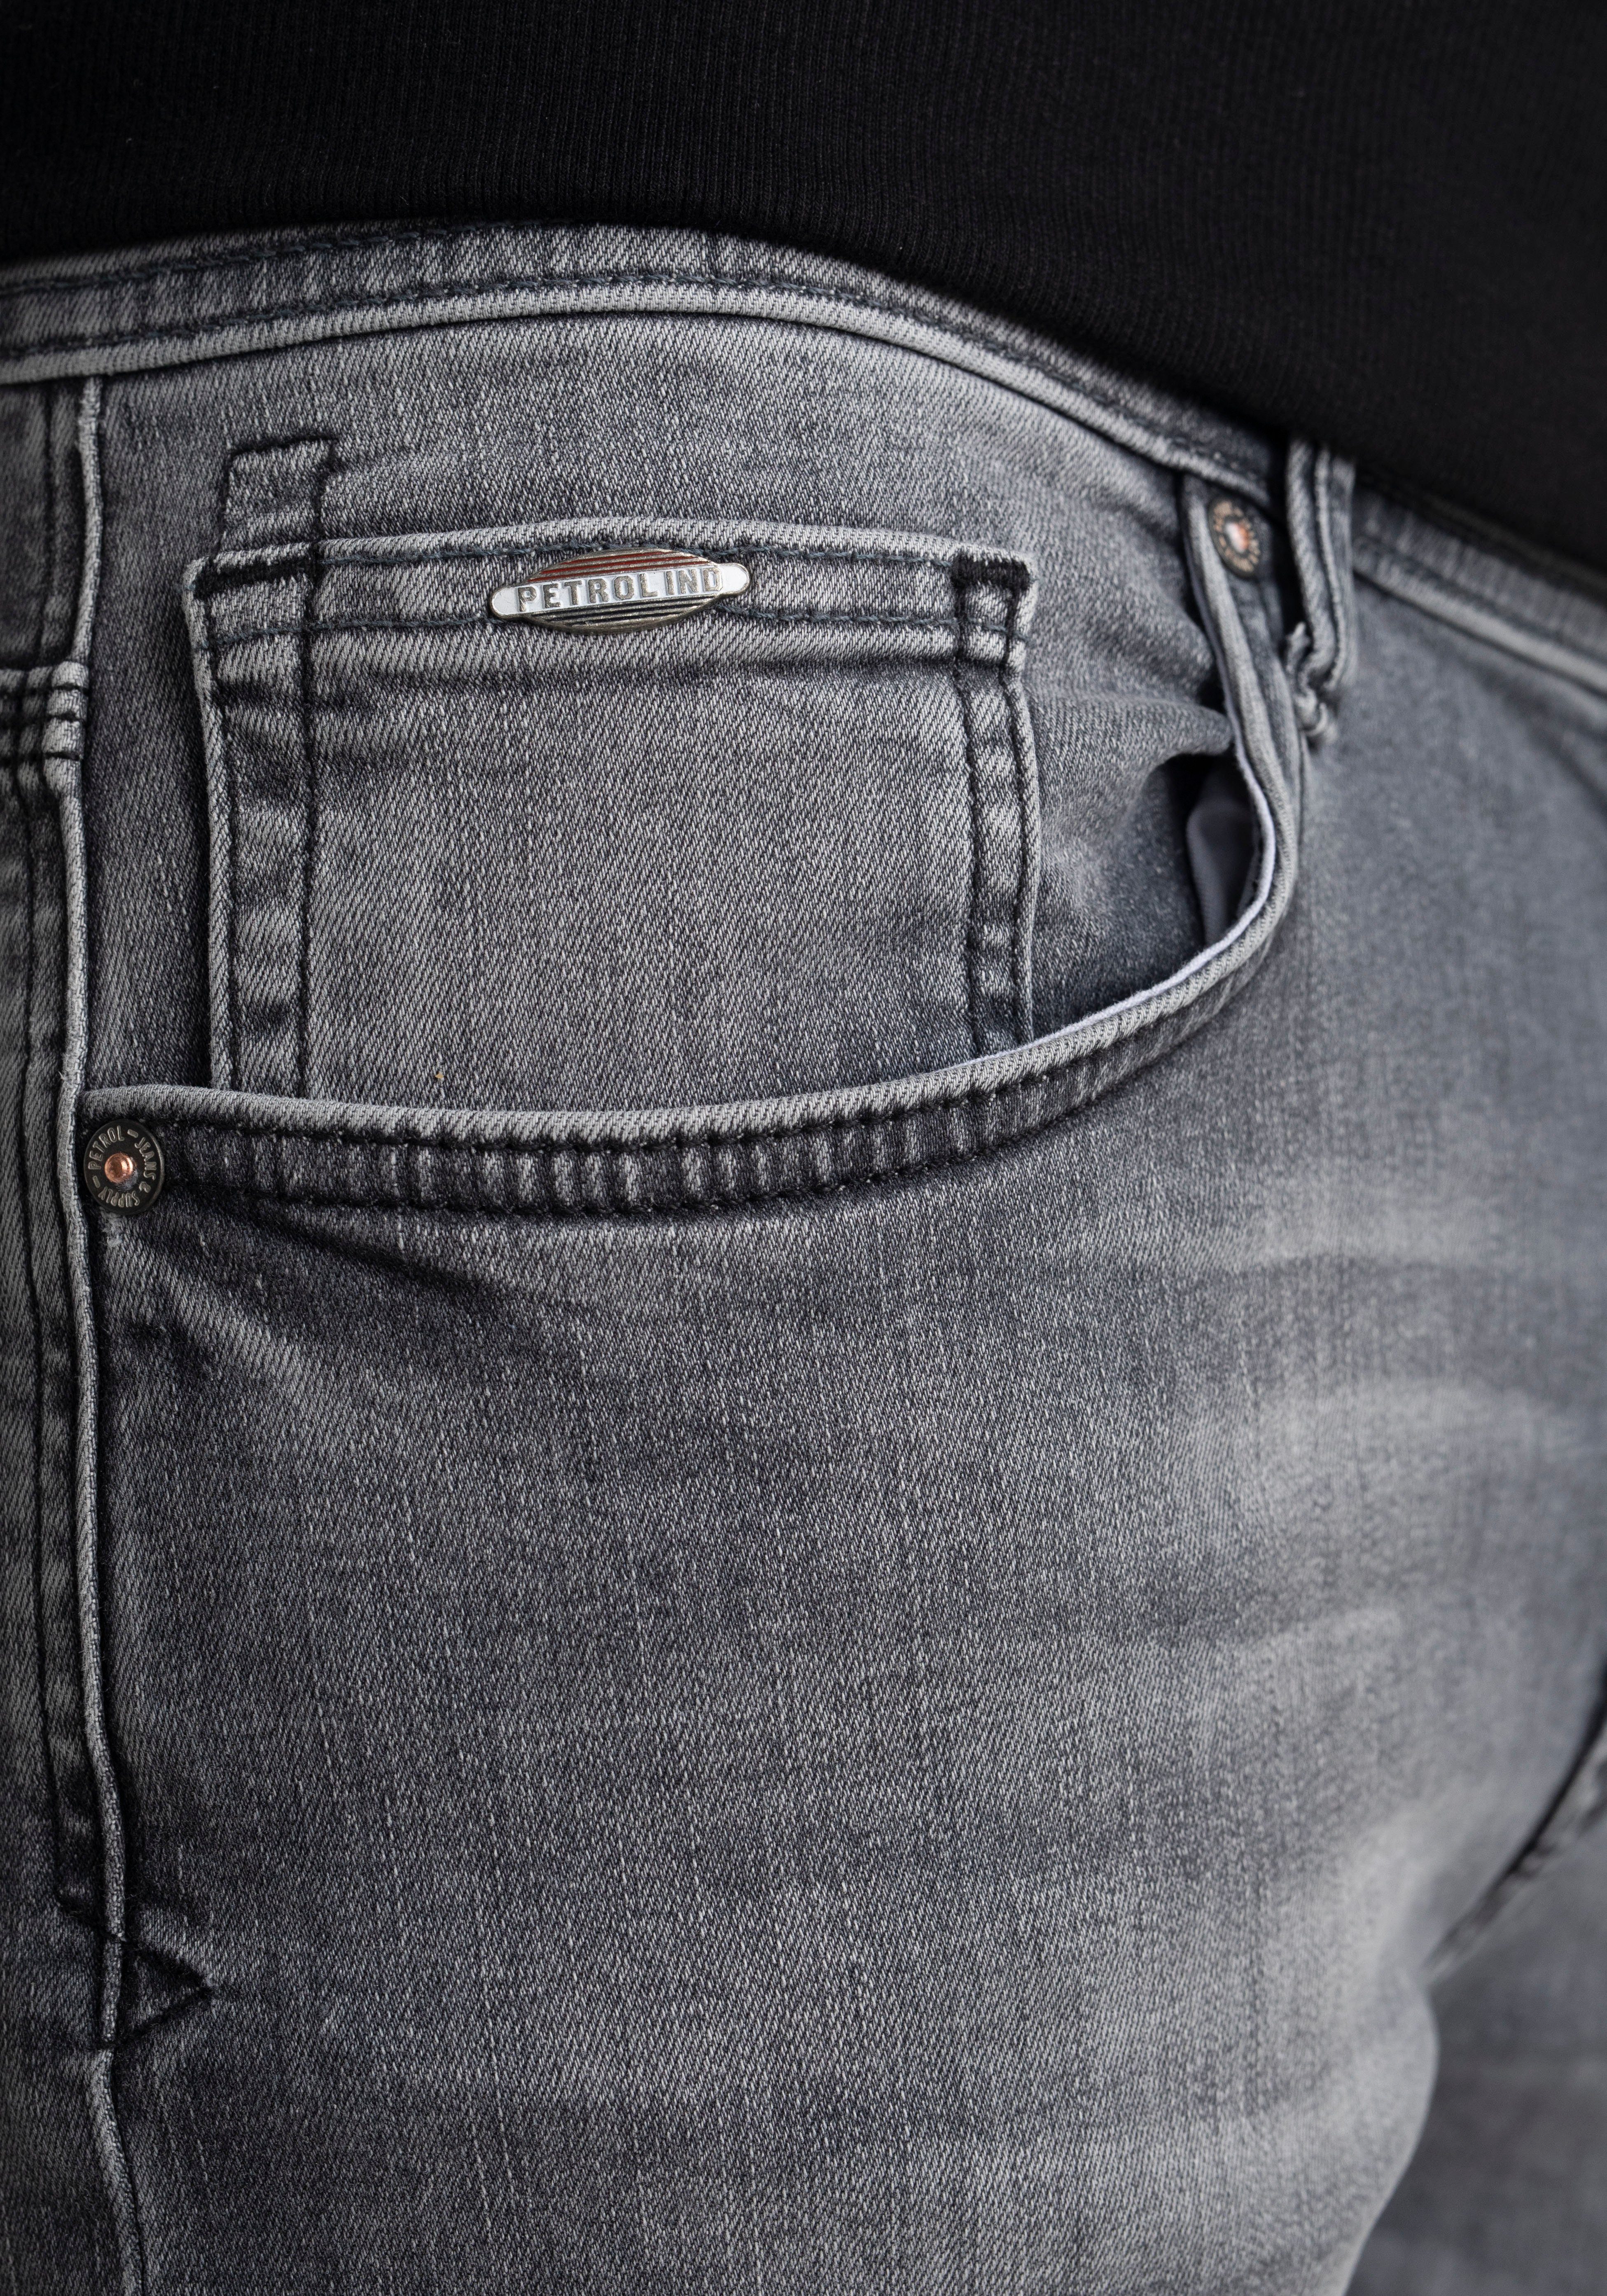 Petrol Industries Slim-fit-Jeans SEAHAM-FUTUREPROOF grey-wash